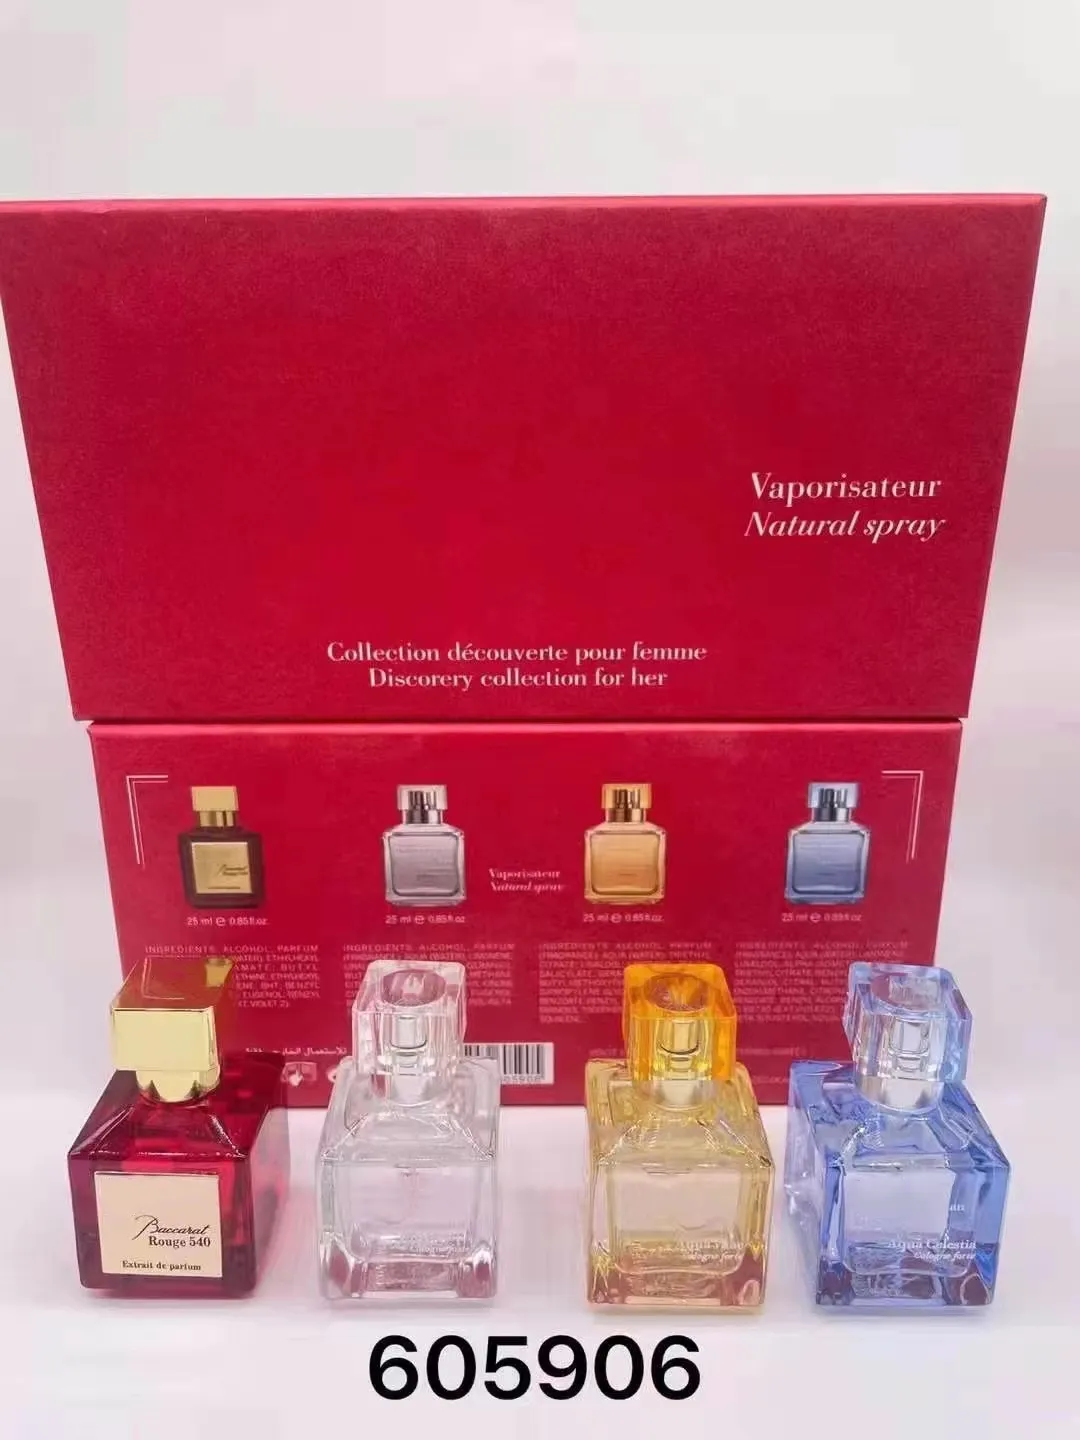 Brand de Premierlash Brand Paris Perfume Set 25ml 4pcs Rouge 540 Parfum Floral Fragrance Mood ExtraTit Long Lasting Darding Spel Spray Boad Boad 4 in 1 High Quality